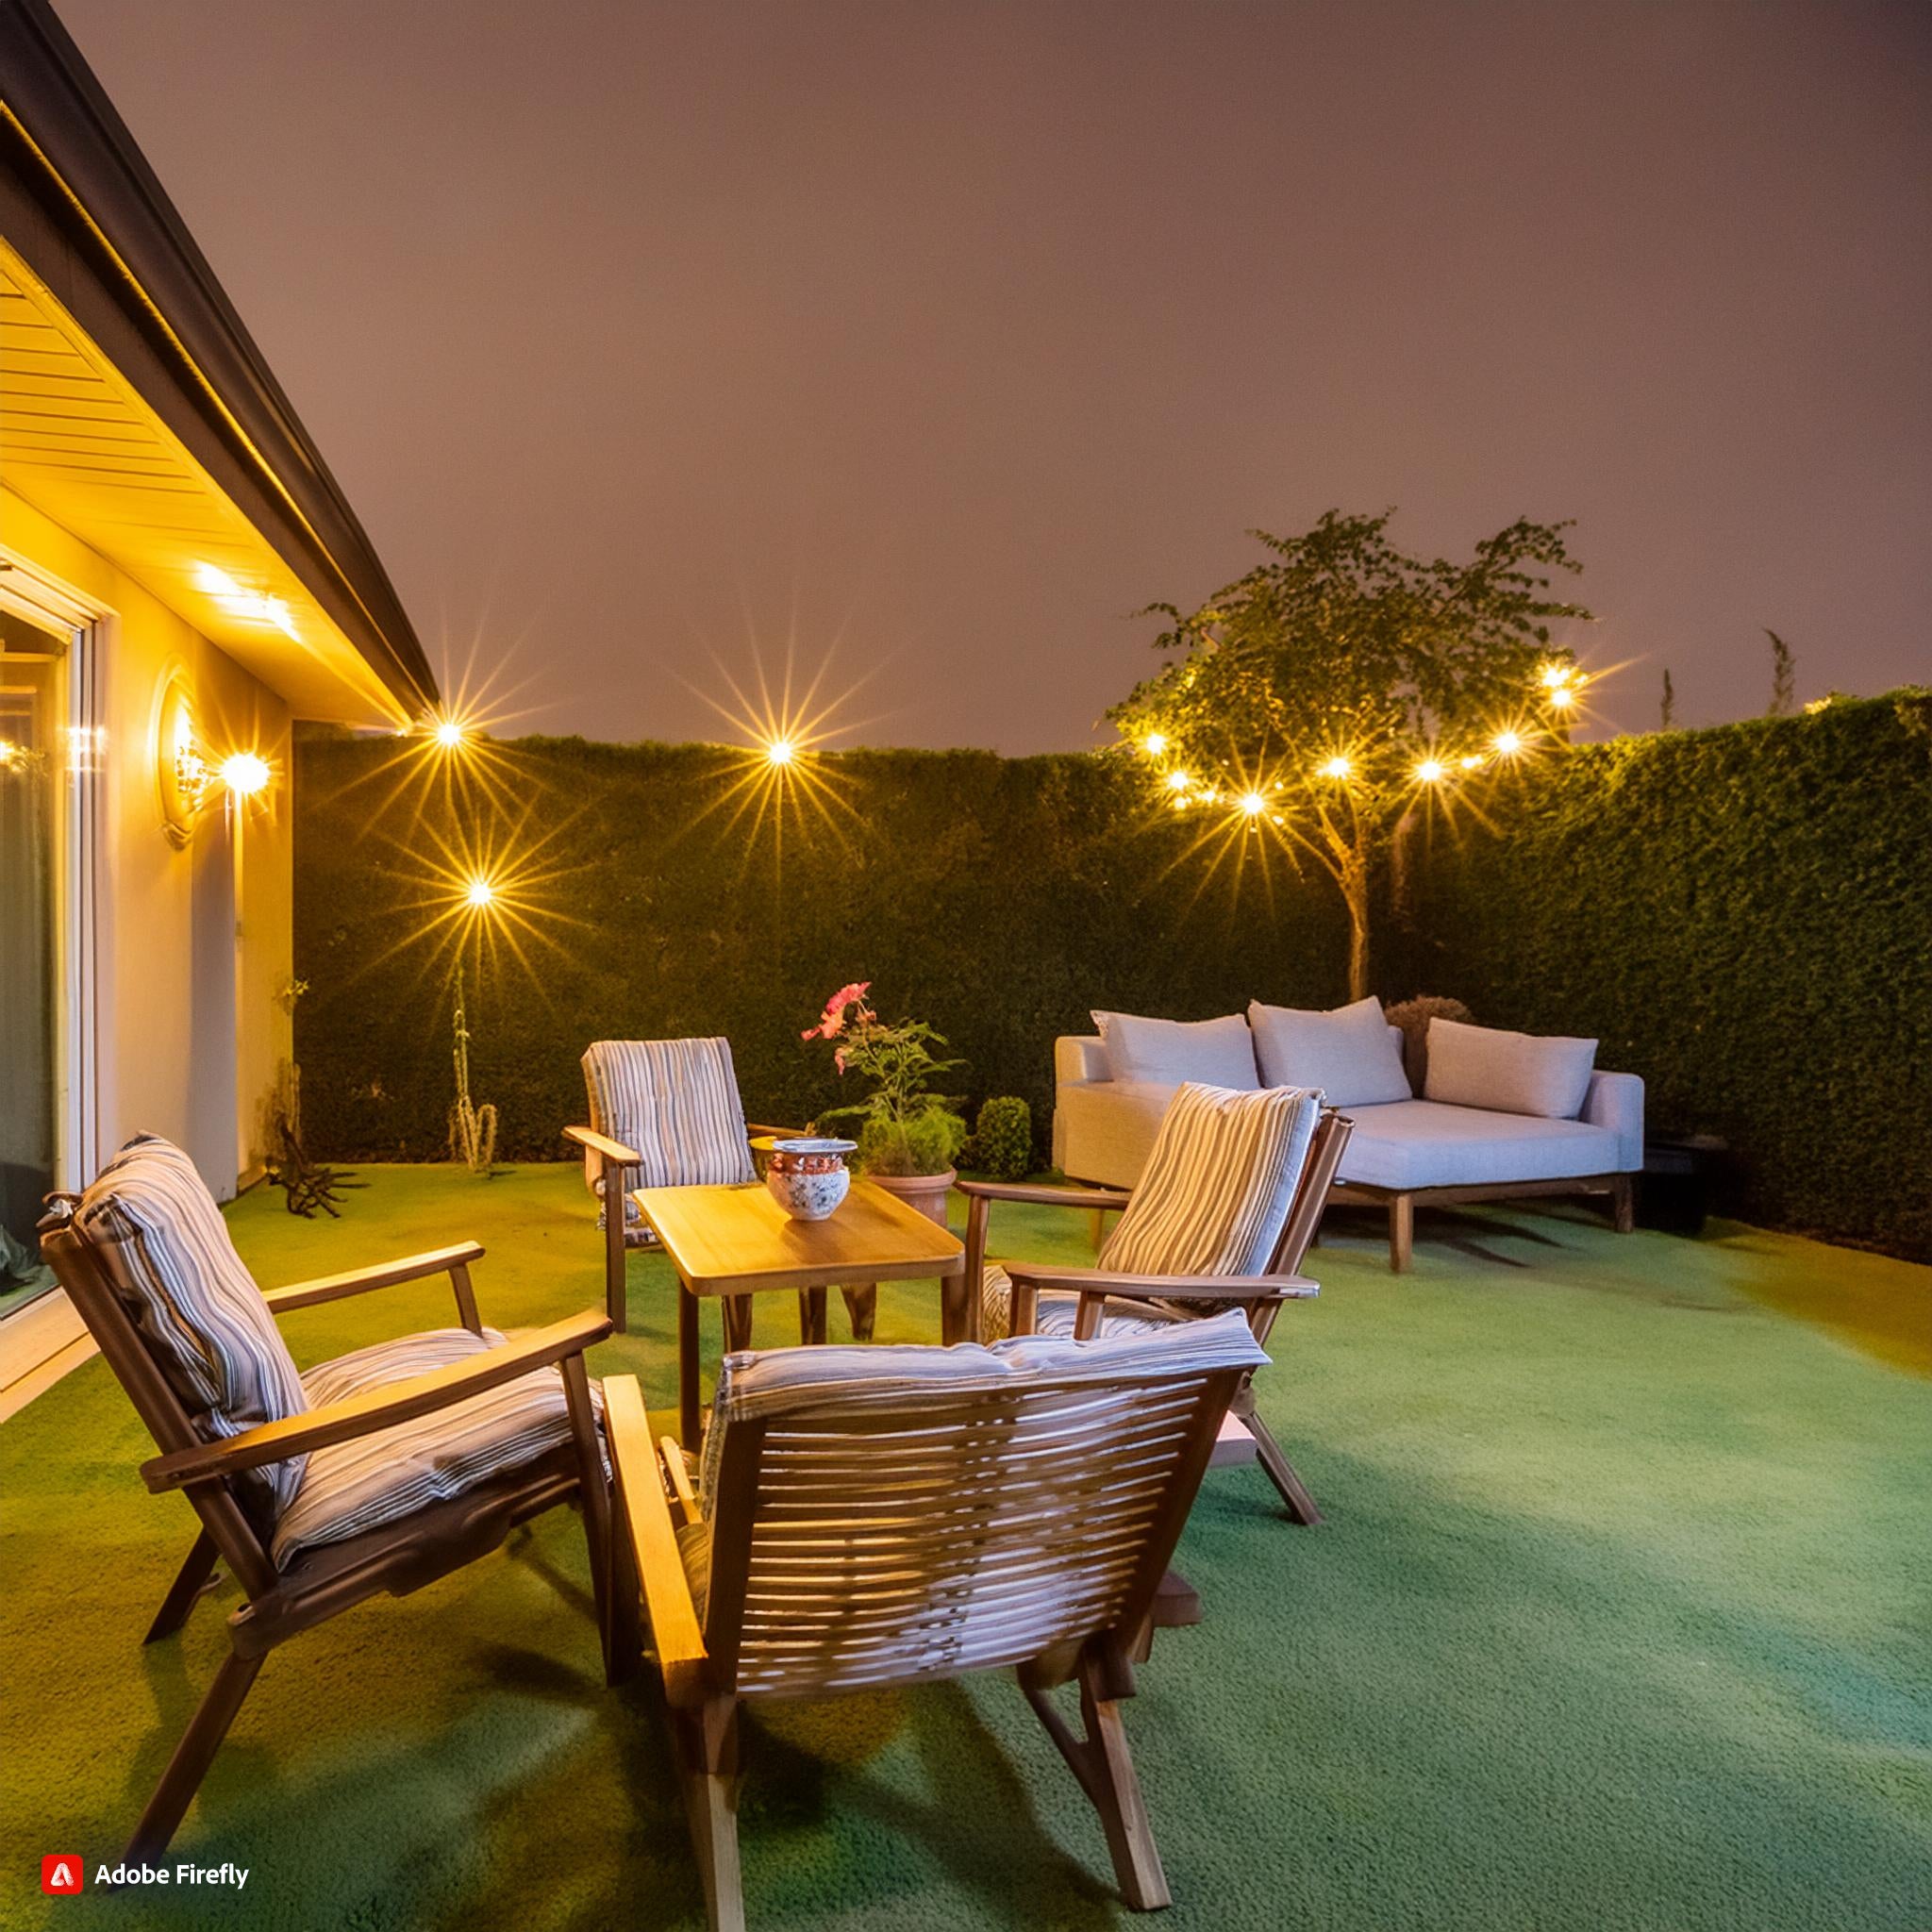 Top Tips for Creating a Relaxing & Functional Backyard Retreat